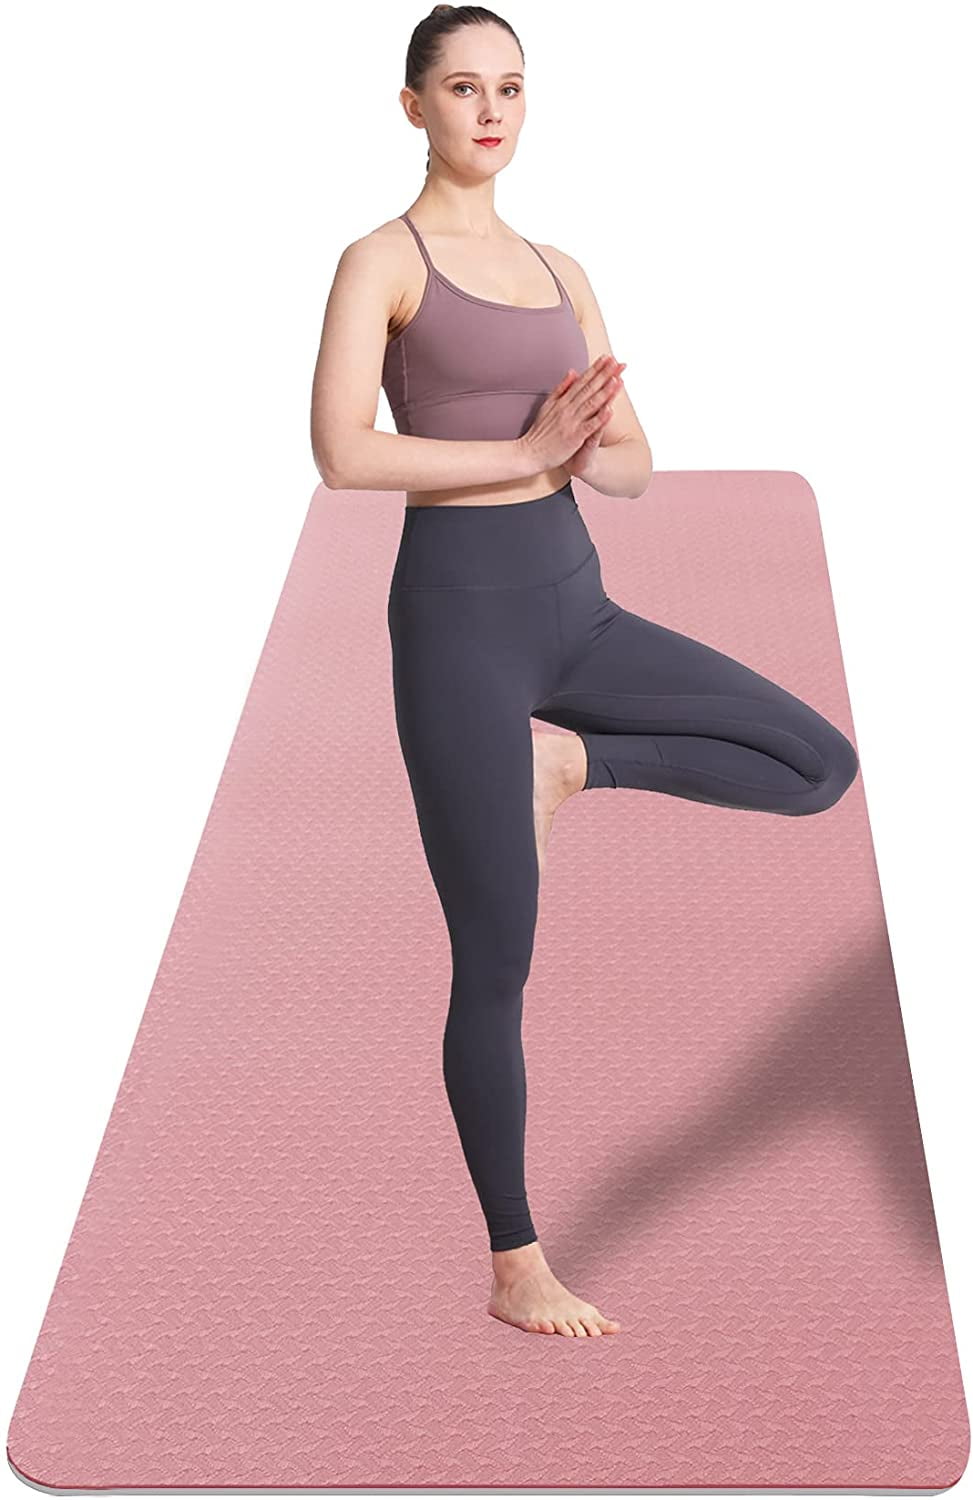 5mm Natural Cork TPE Yoga Mat Meditation Fitness Training Non Slip Eco-Friendly 